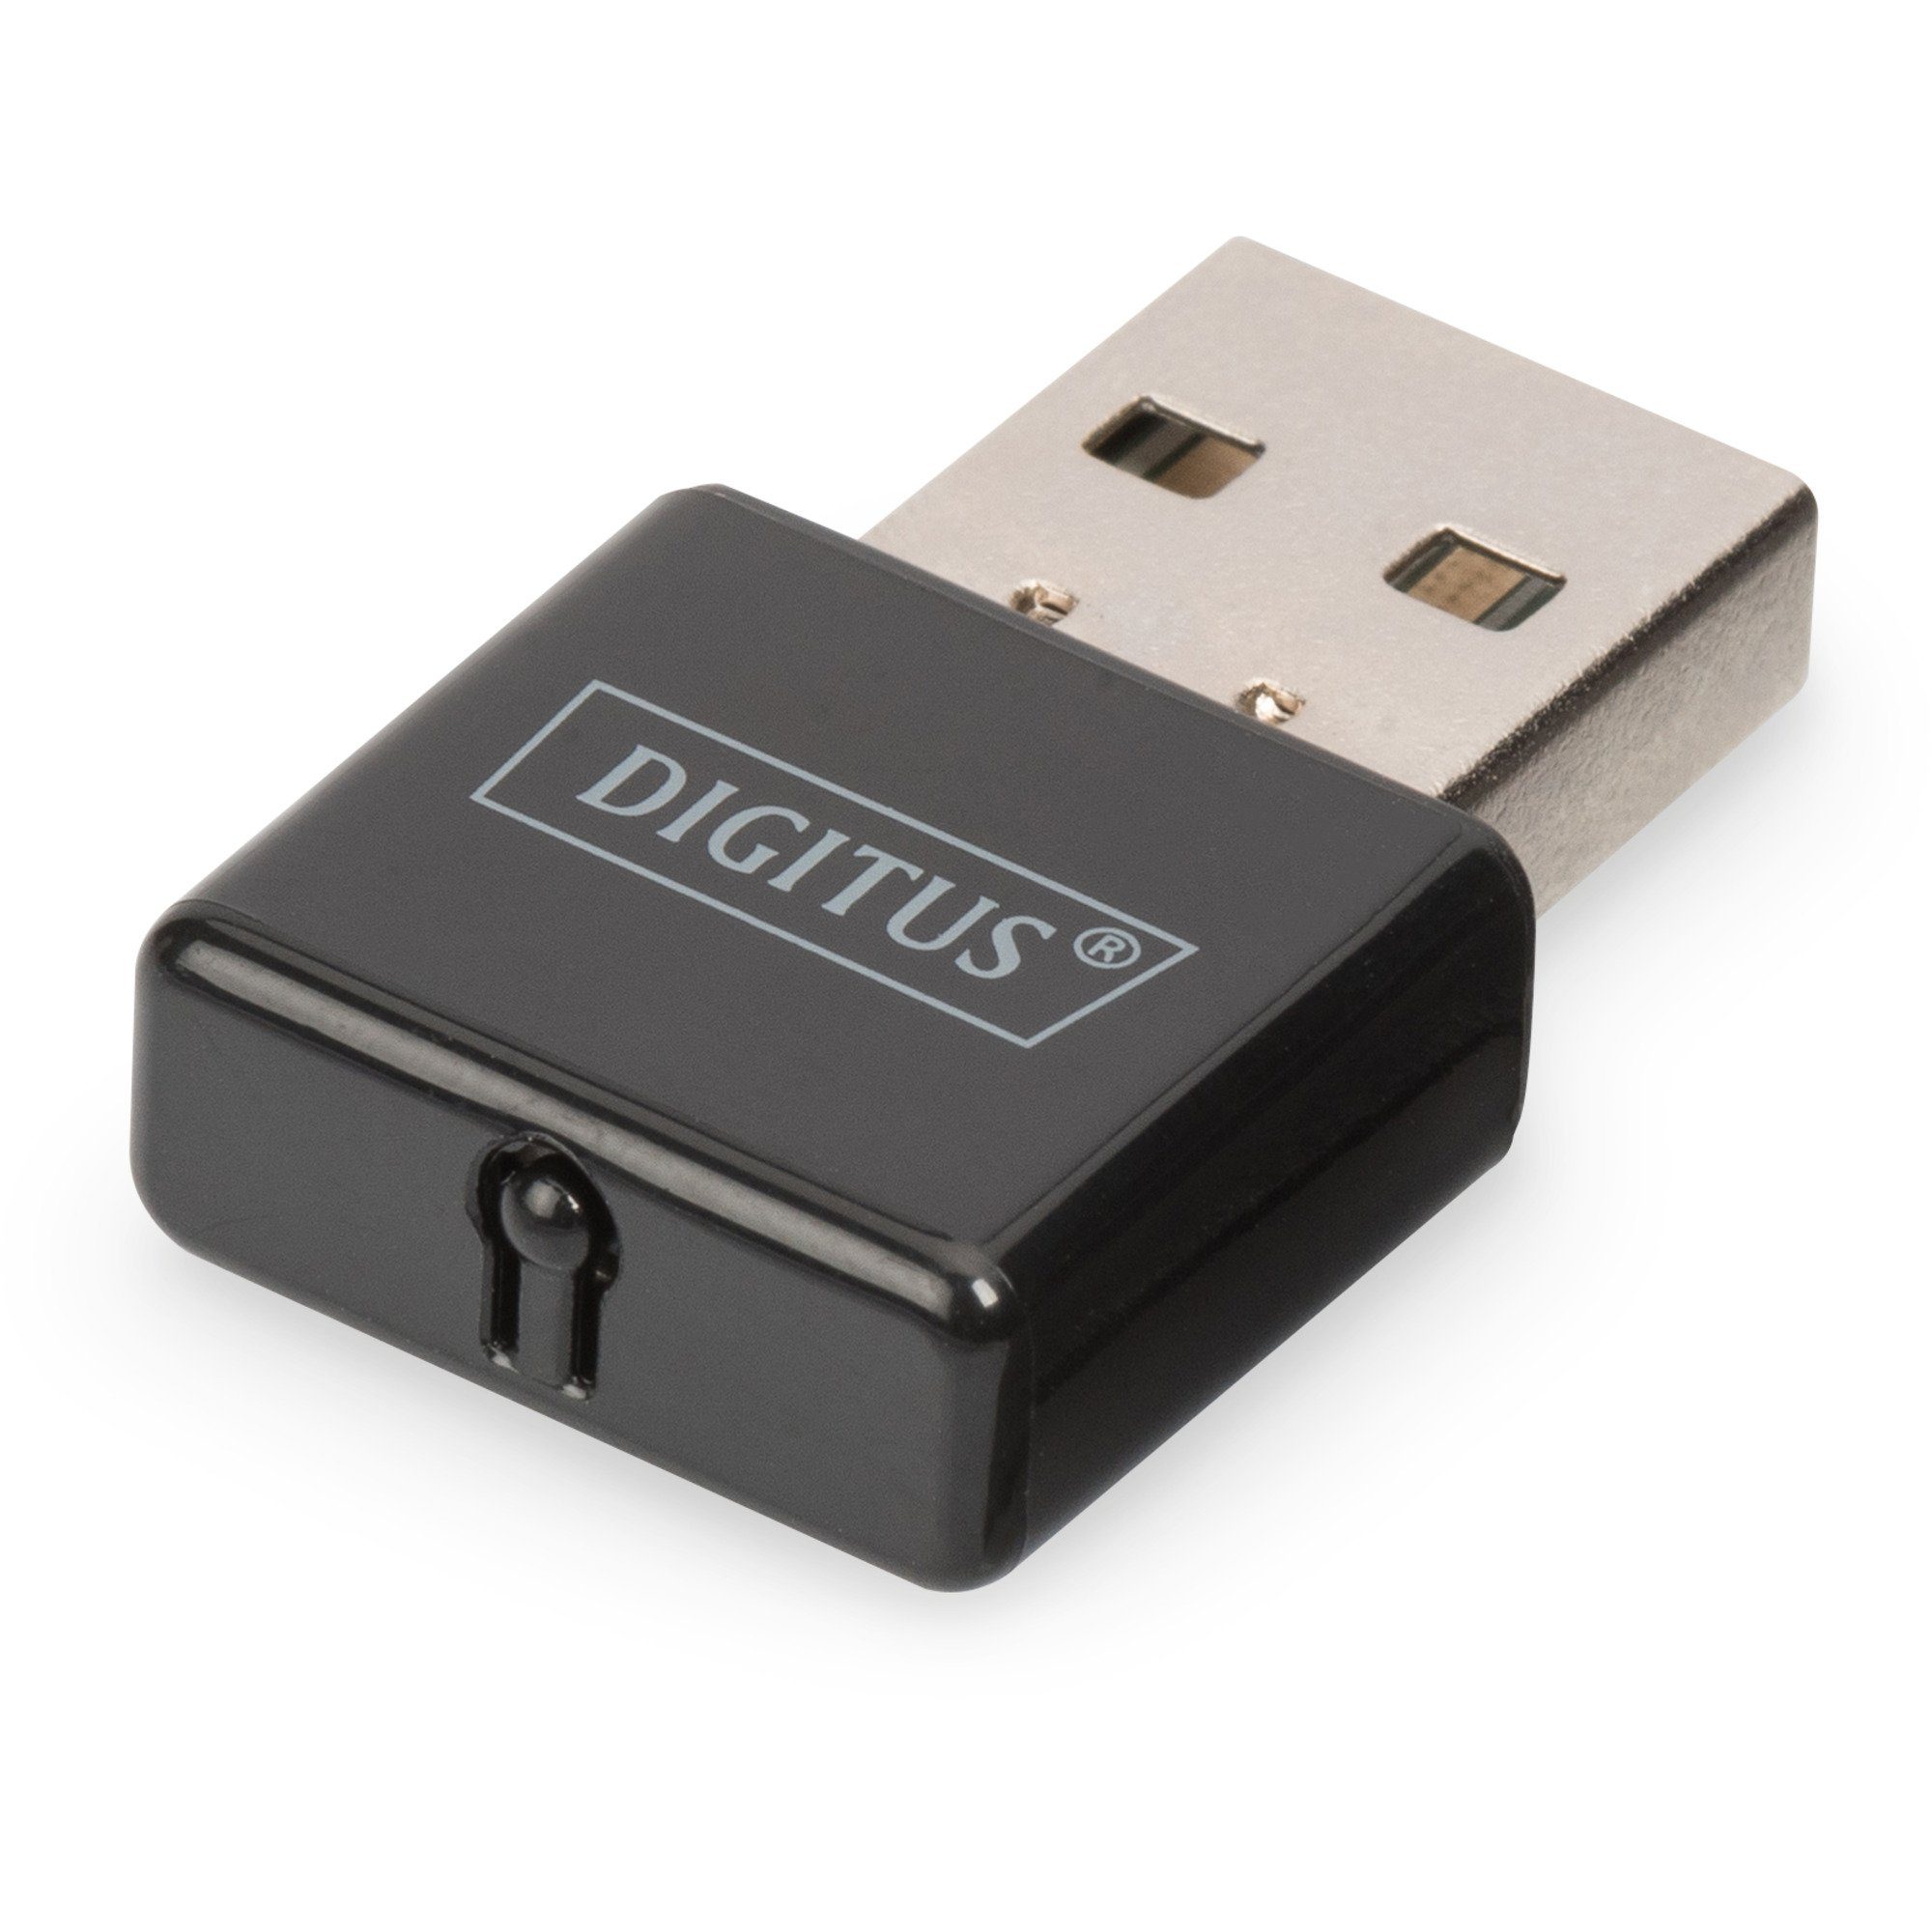 TinyWireless 2.0 Digitus 300N adapter Digitus USB Netzwerk-Adapter